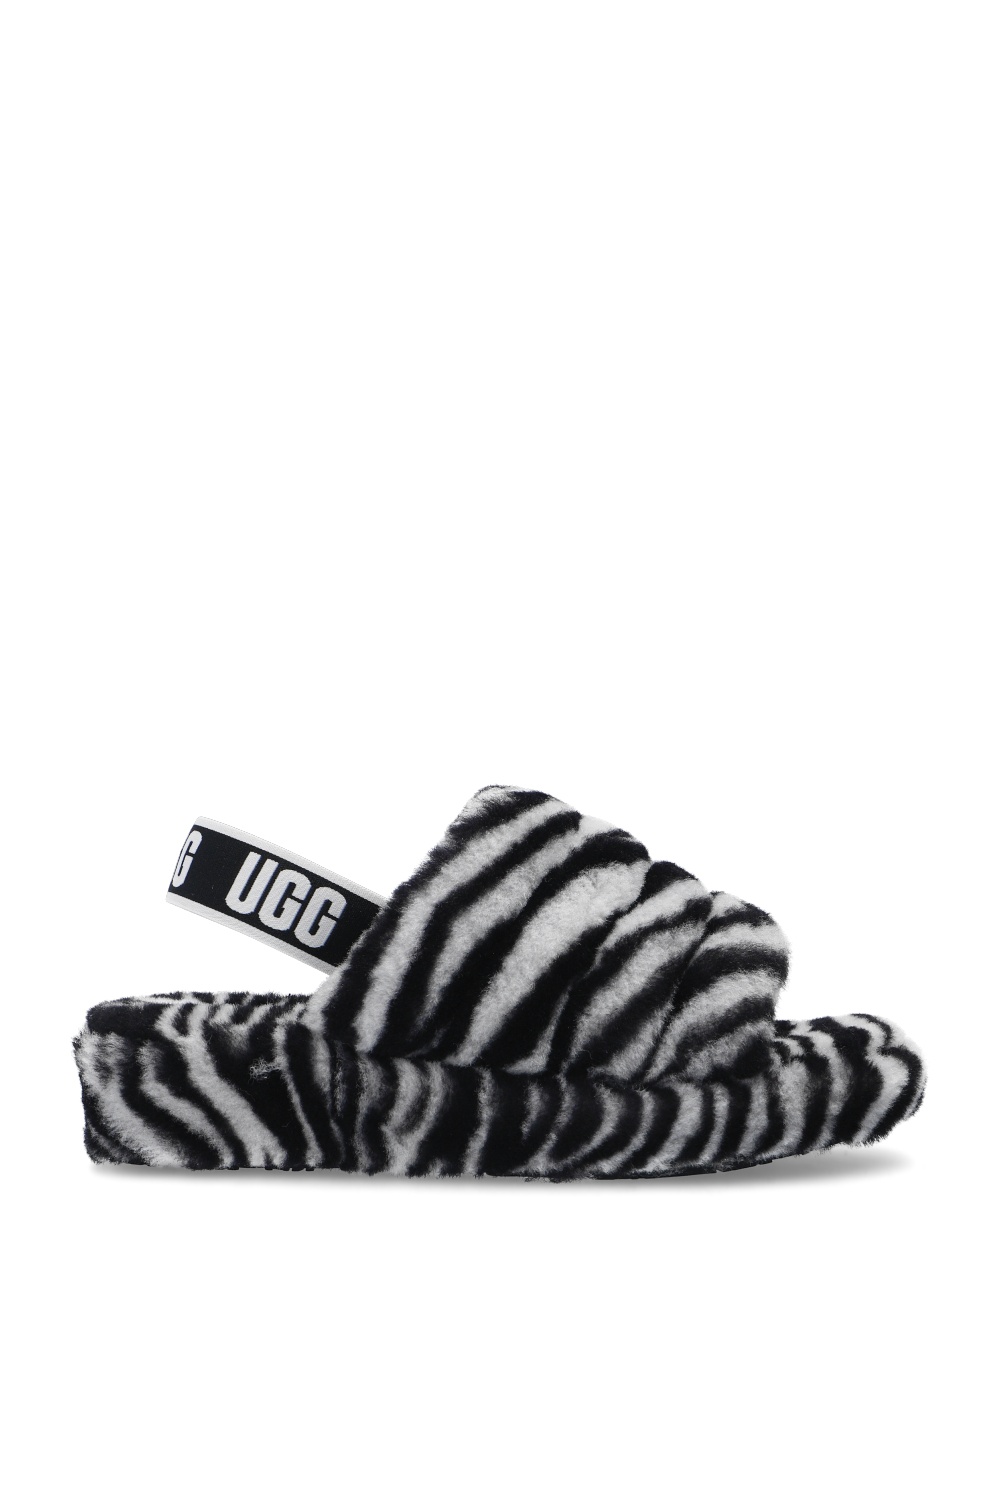 zebra print ugg slippers